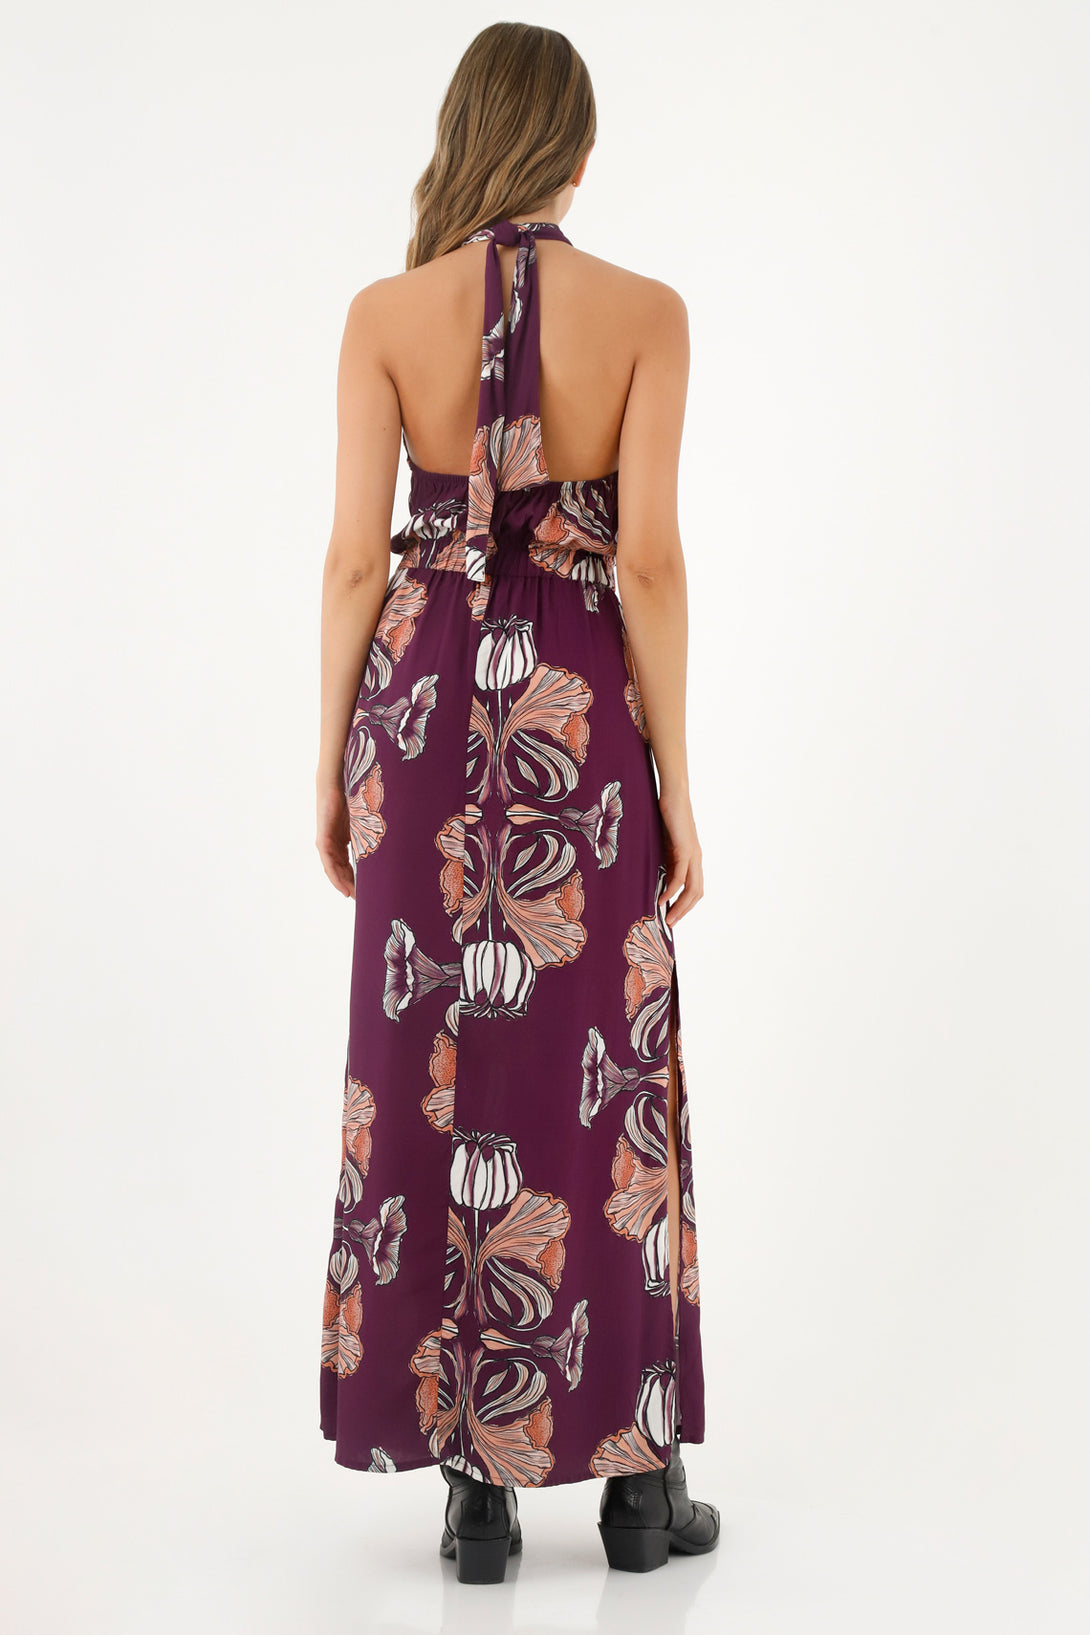 Tns dress for women, long Hongod print dresses on purple background